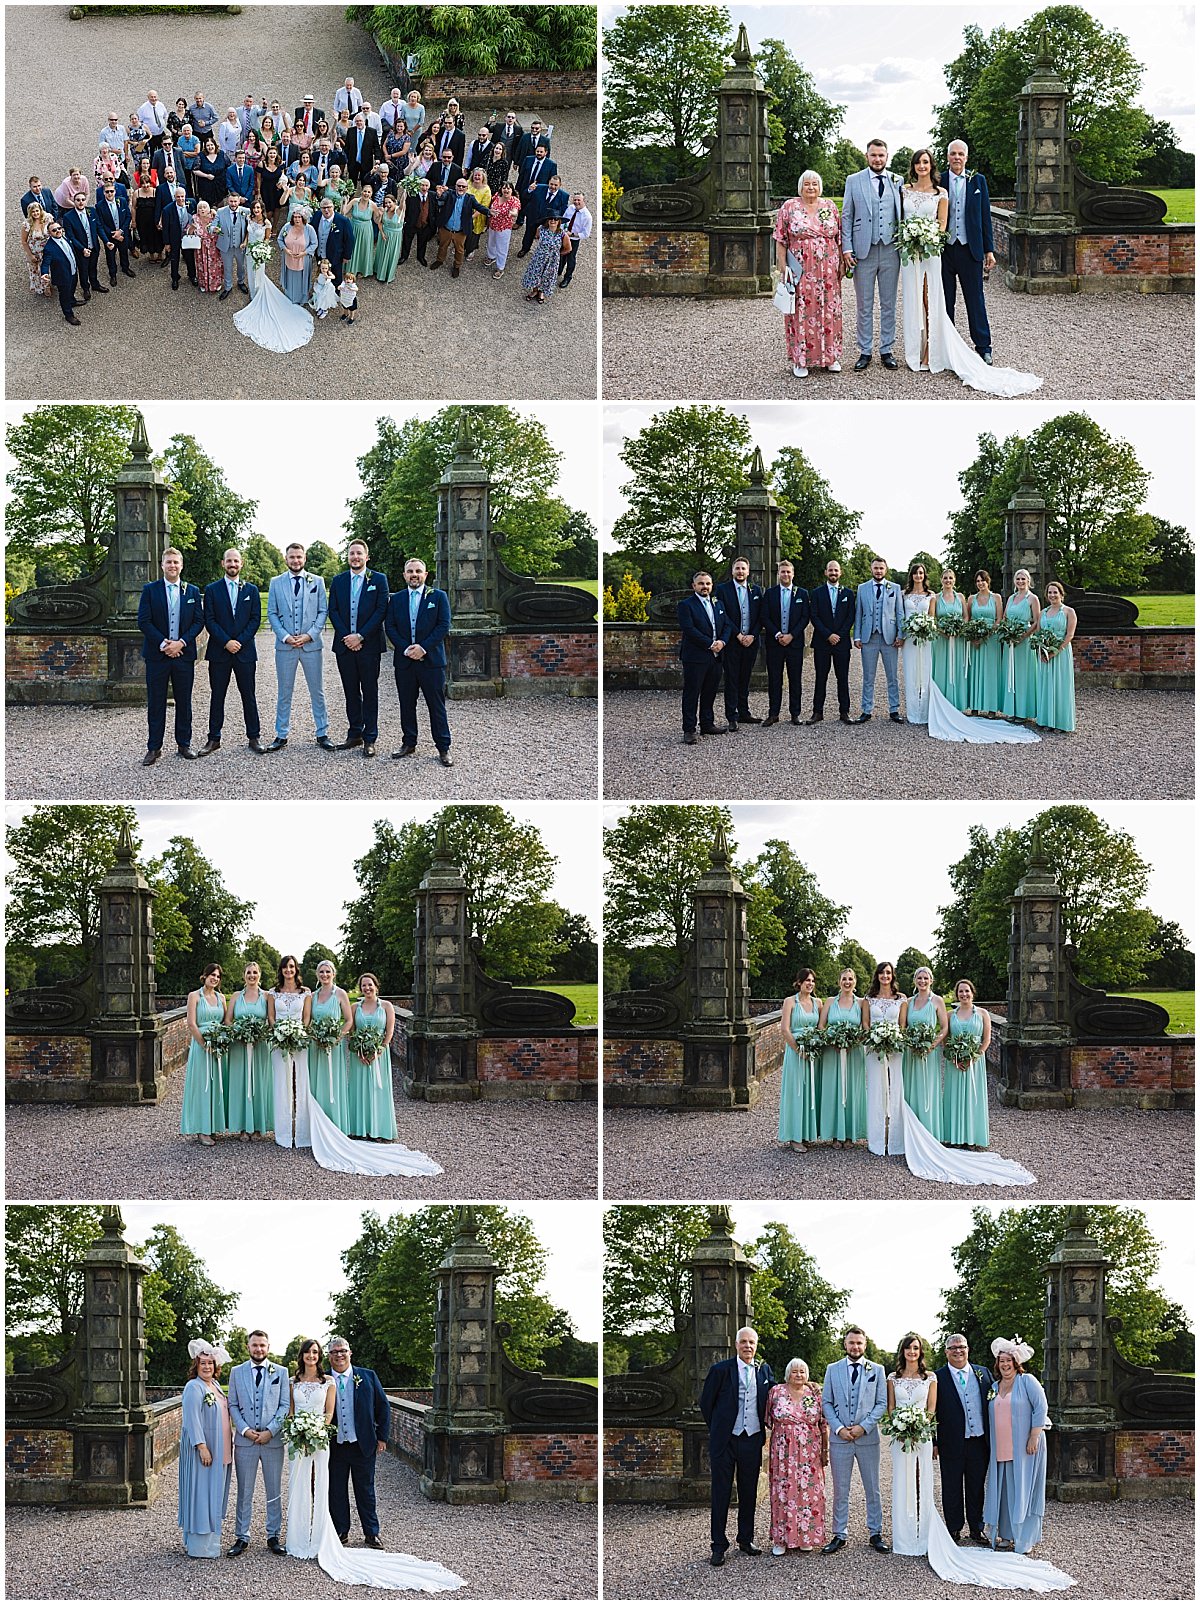 formal wedding photos at arley hall and gardens